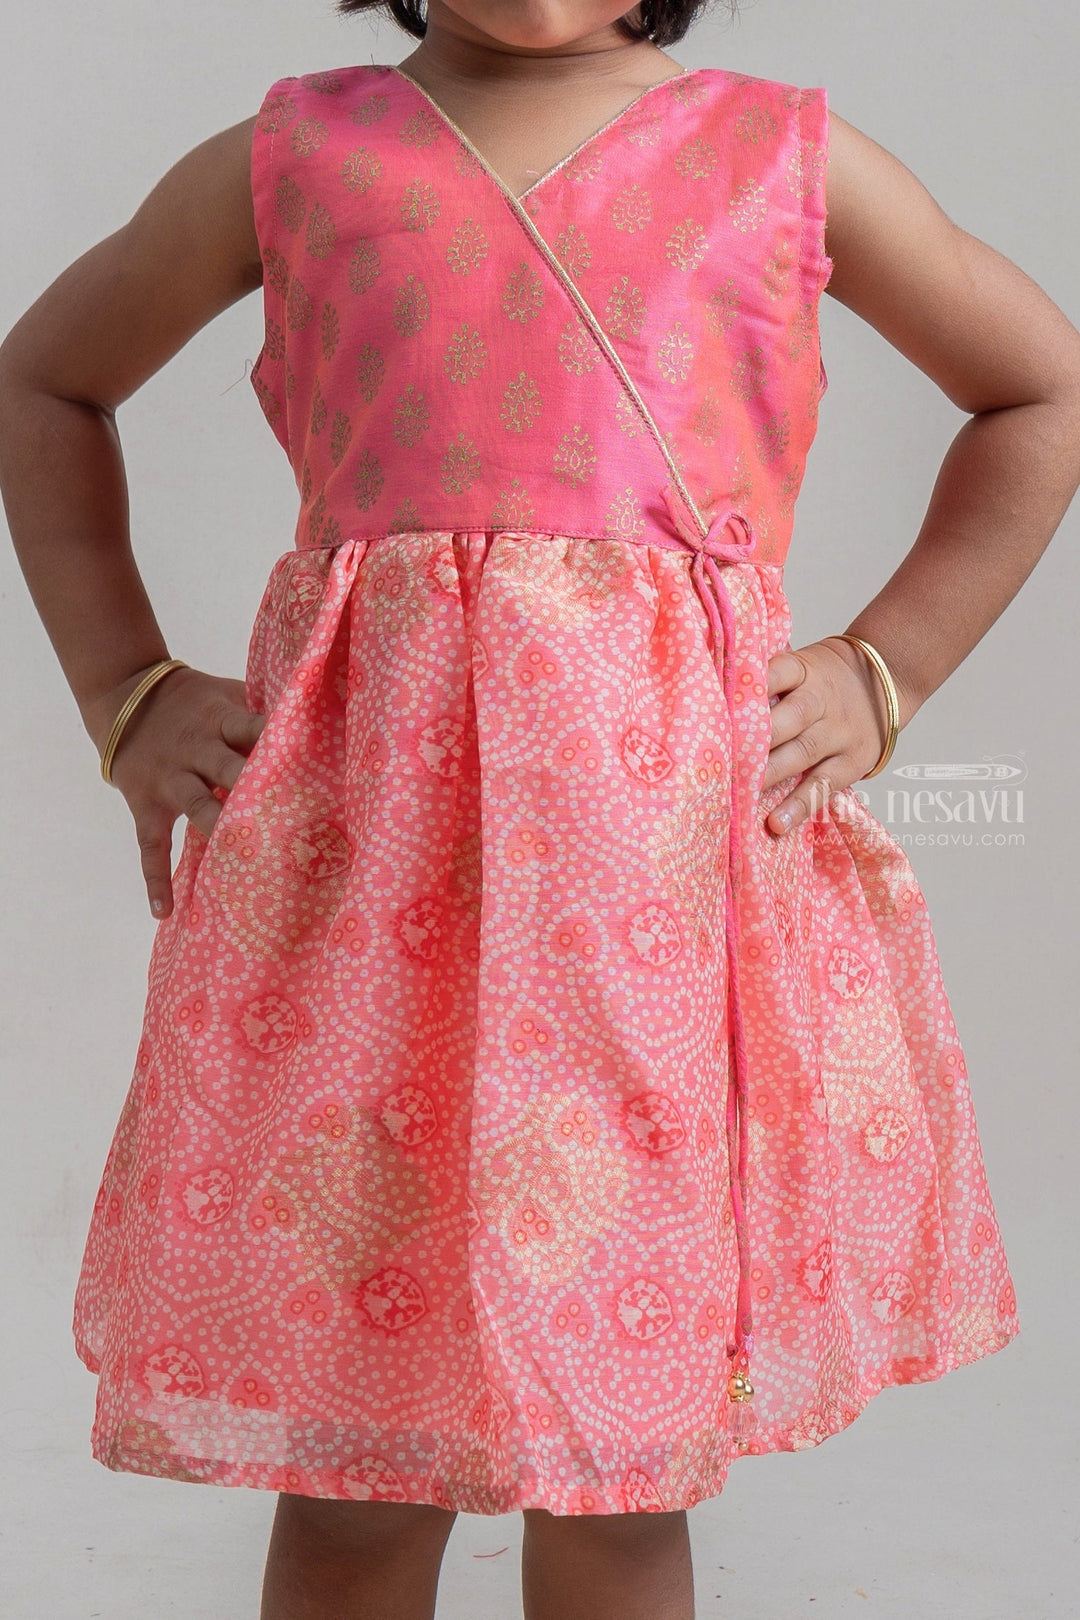 The Nesavu Frocks & Dresses Charming Salmon Pink Sleeveless Geometric Printed Cotton Frock For Girls psr silks Nesavu